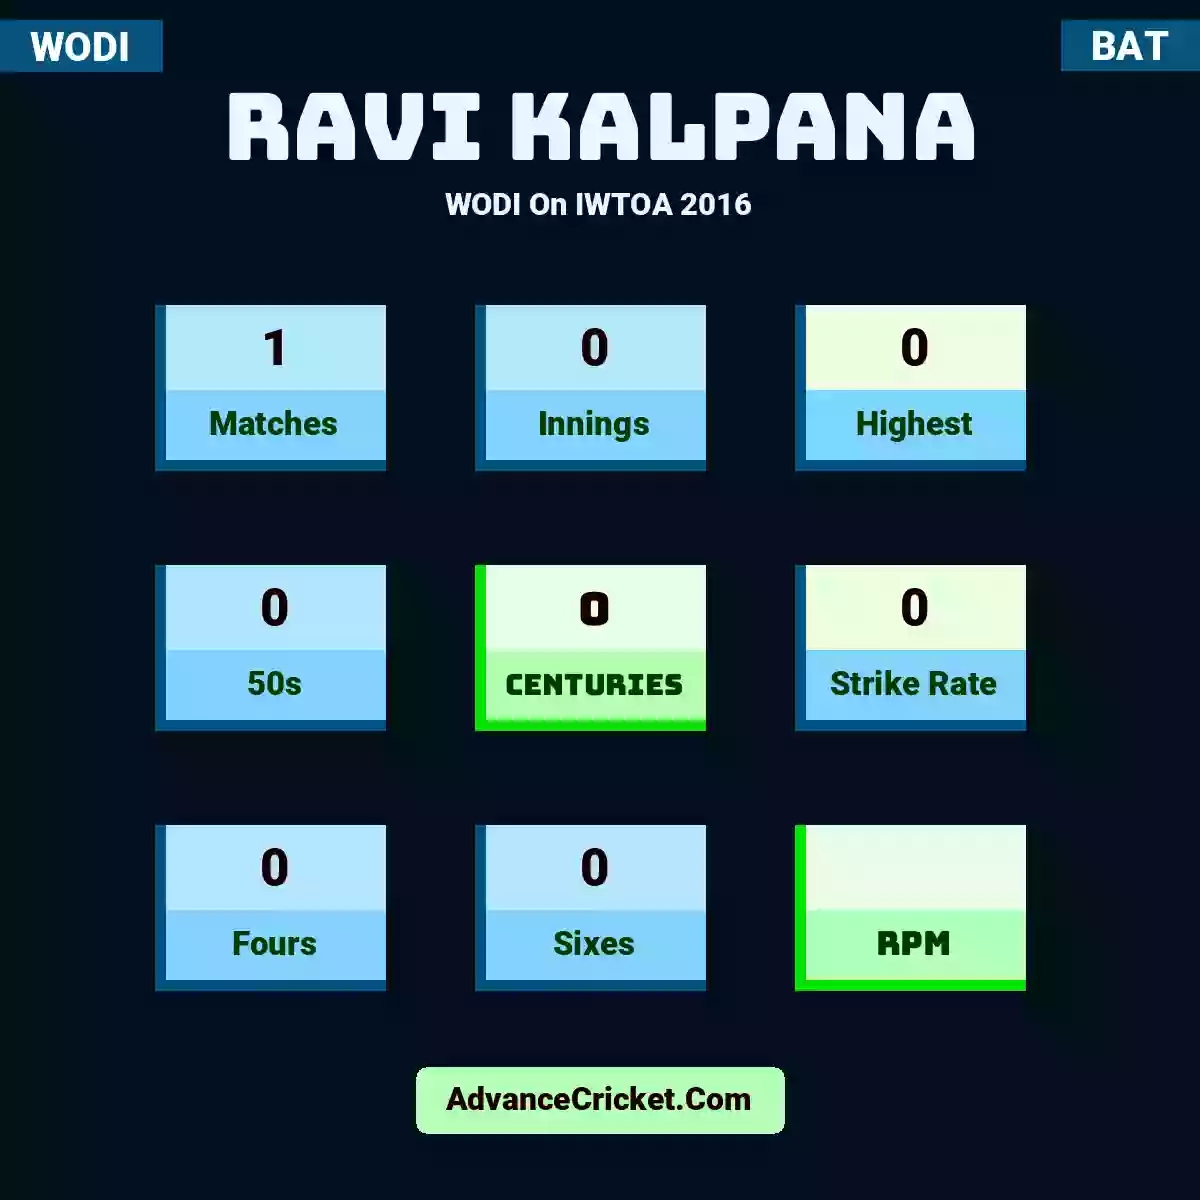 Ravi Kalpana WODI  On IWTOA 2016, Ravi Kalpana played 1 matches, scored 0 runs as highest, 0 half-centuries, and 0 centuries, with a strike rate of 0. R.Kalpana hit 0 fours and 0 sixes.